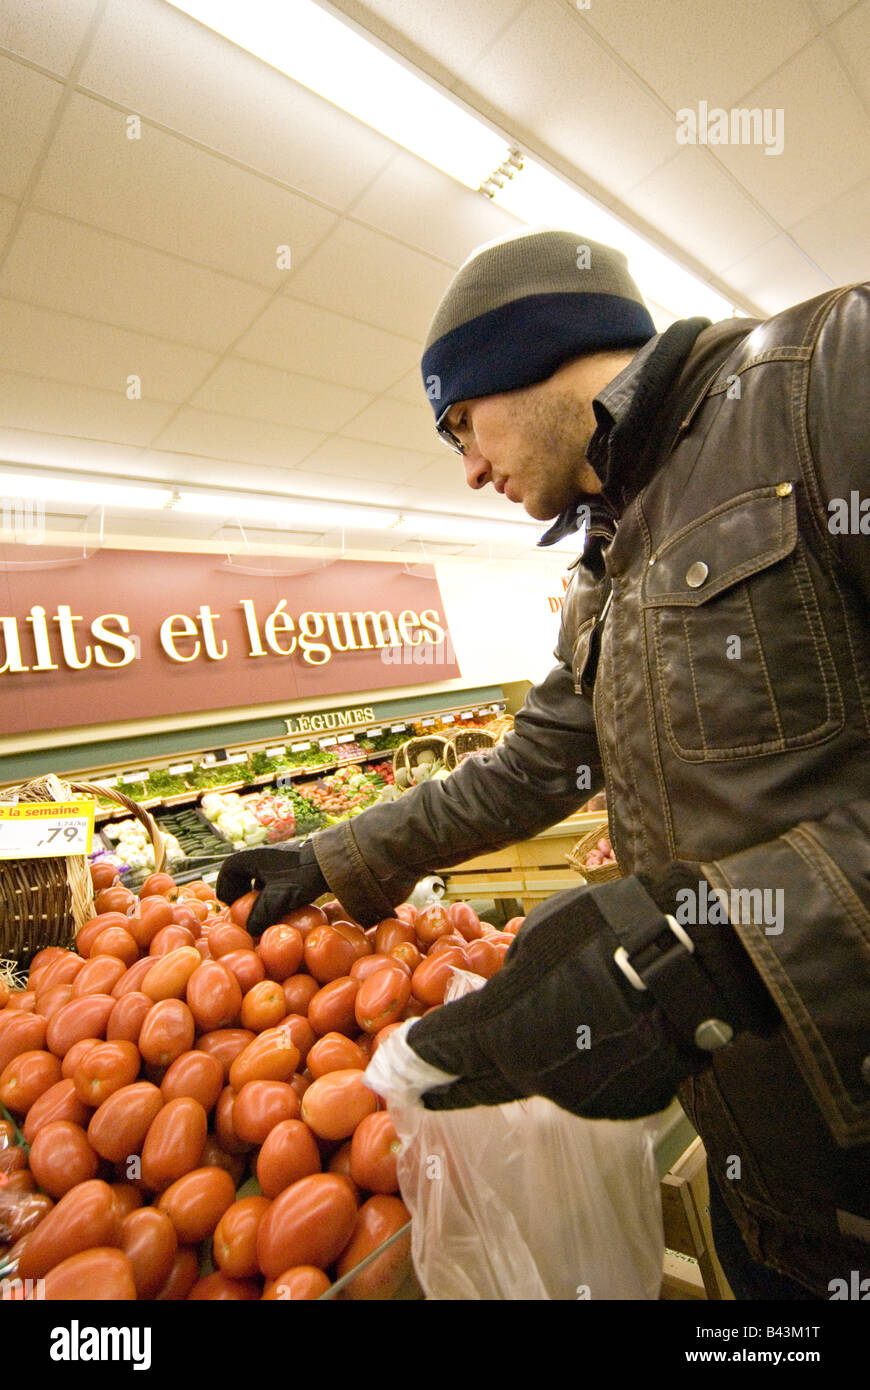 Man shopping for vegetables Stock Photo